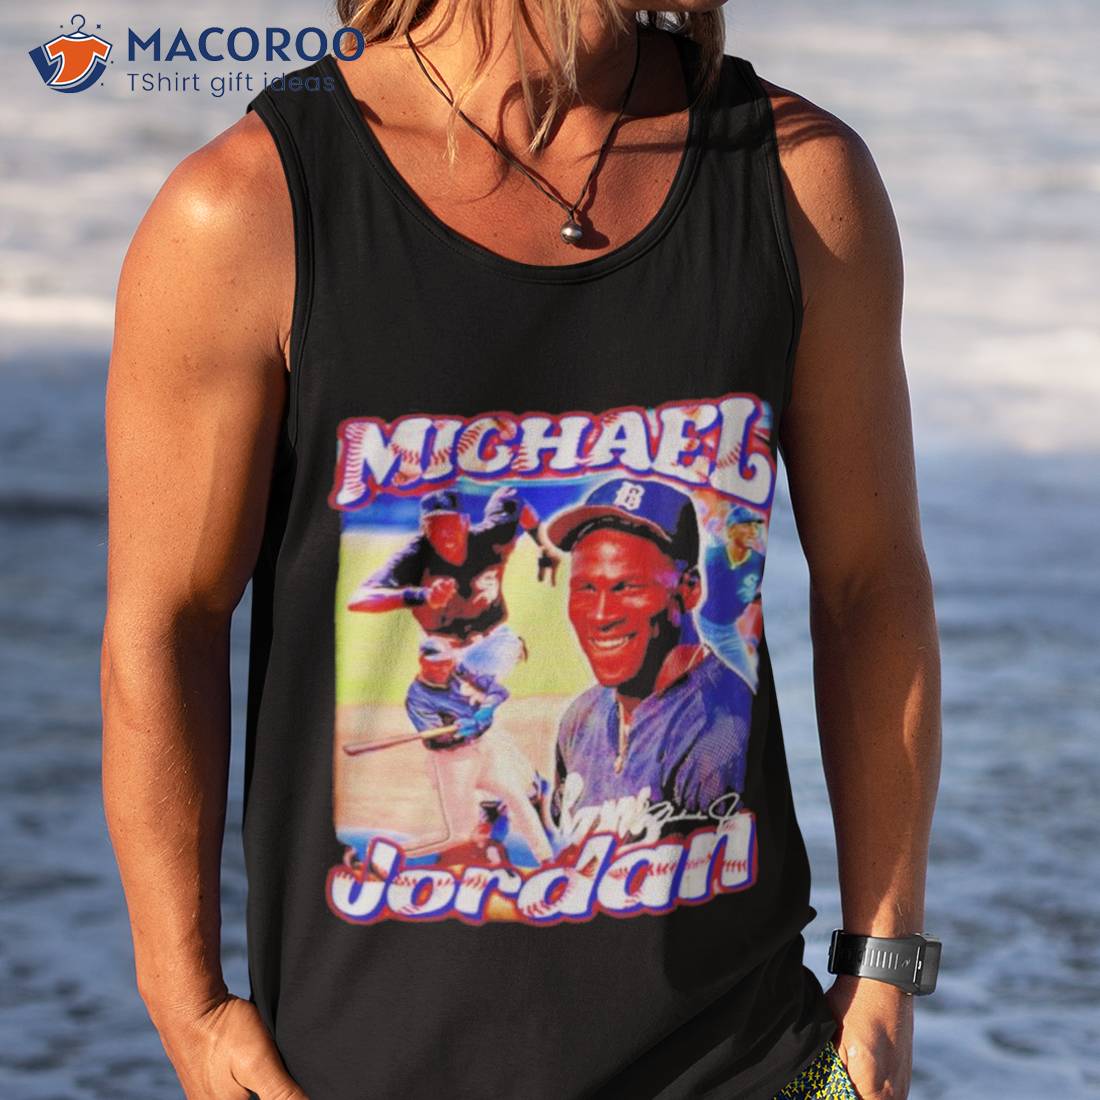 Michael Jordan Chicago White Sox Baseball Jersey for Sale in